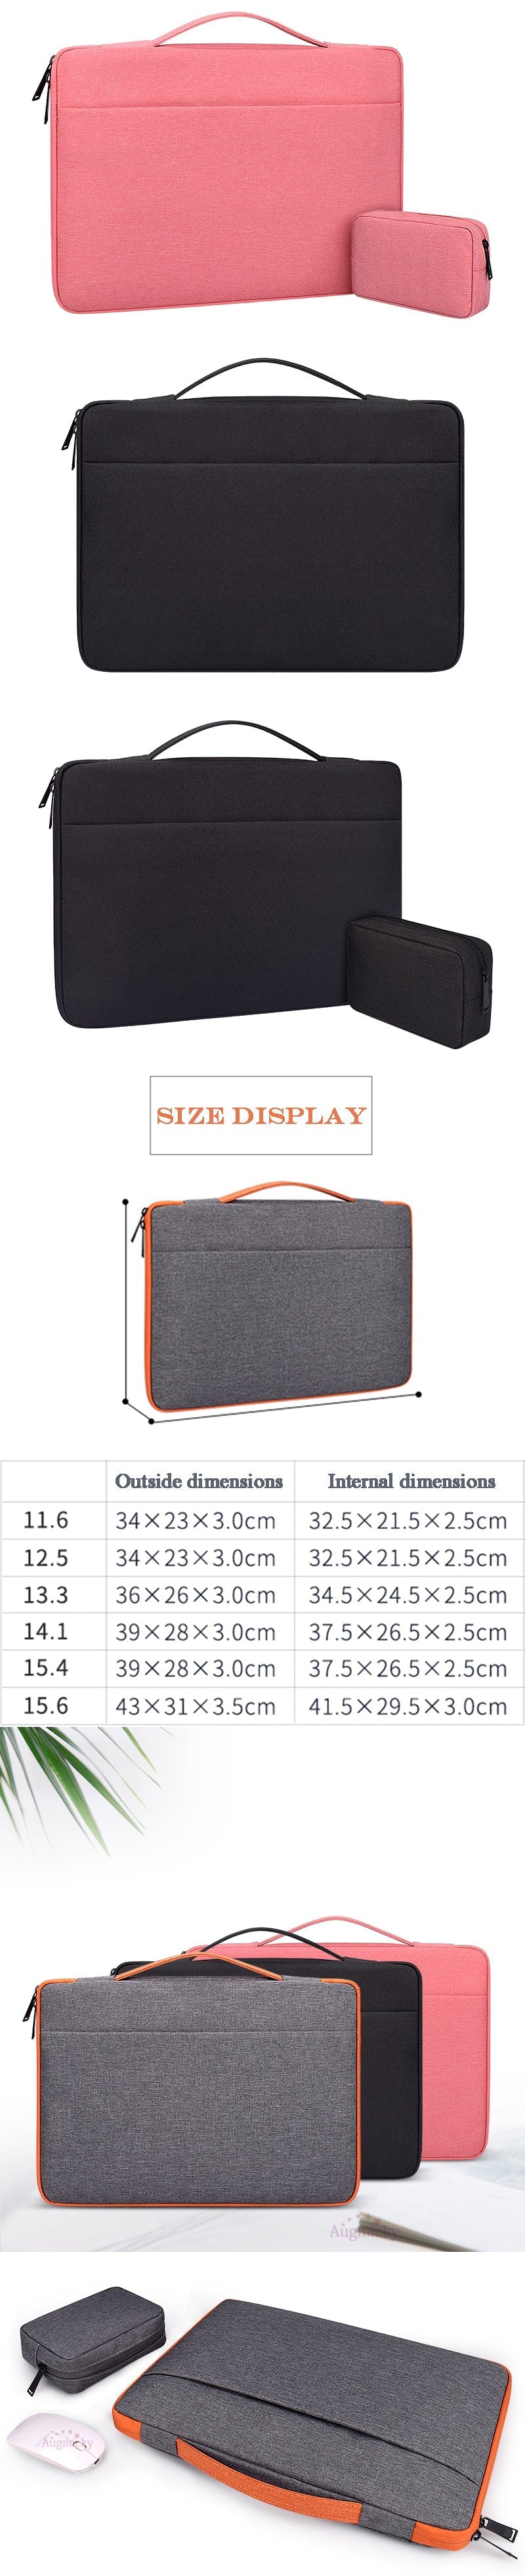 14 inch Versus Laptop Sleeve Bag Set